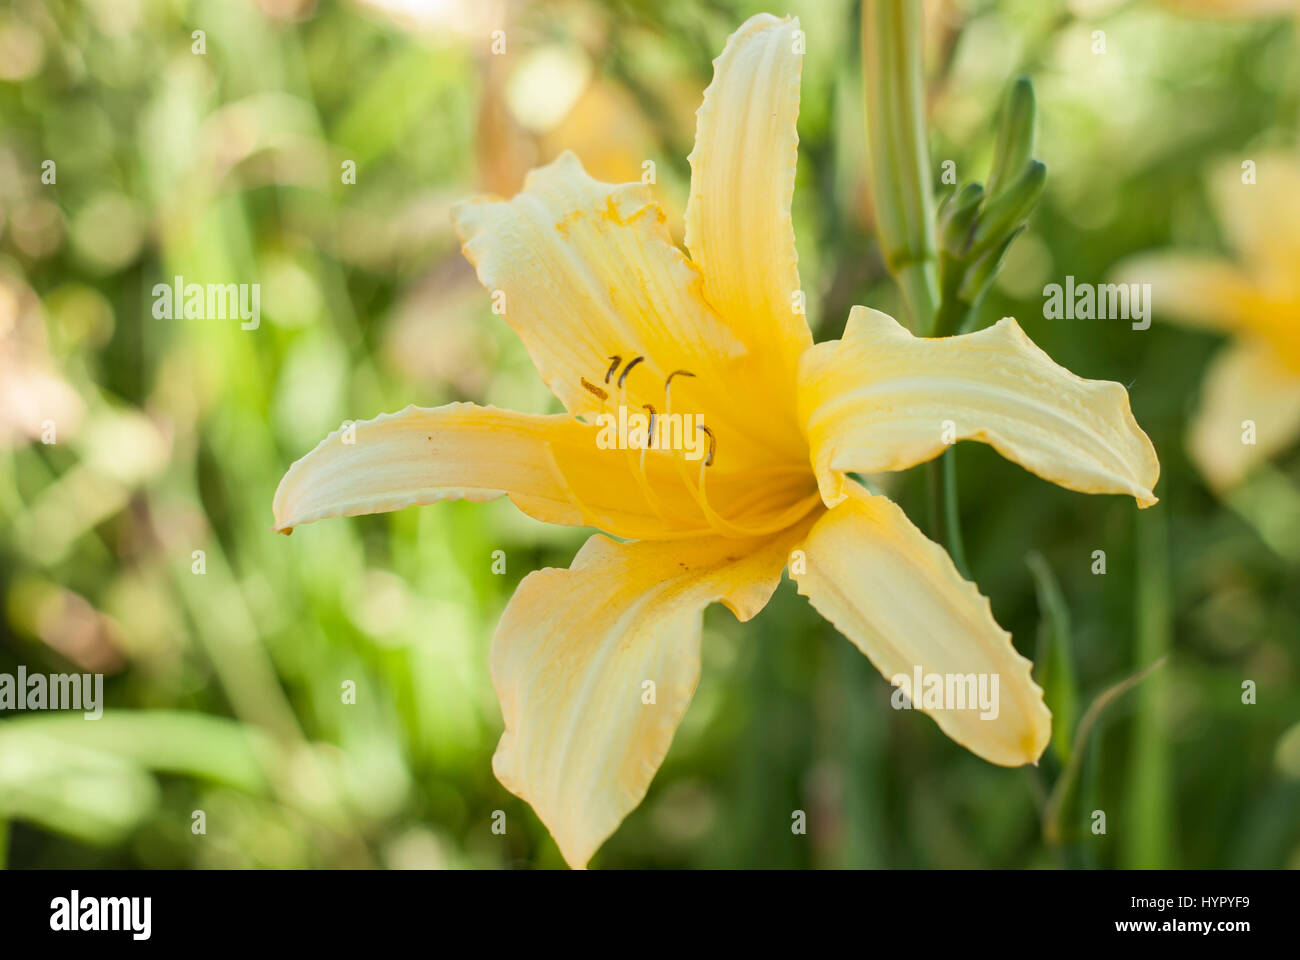 Yellow daylily flower (Hemerocallis) in a garden Stock Photo